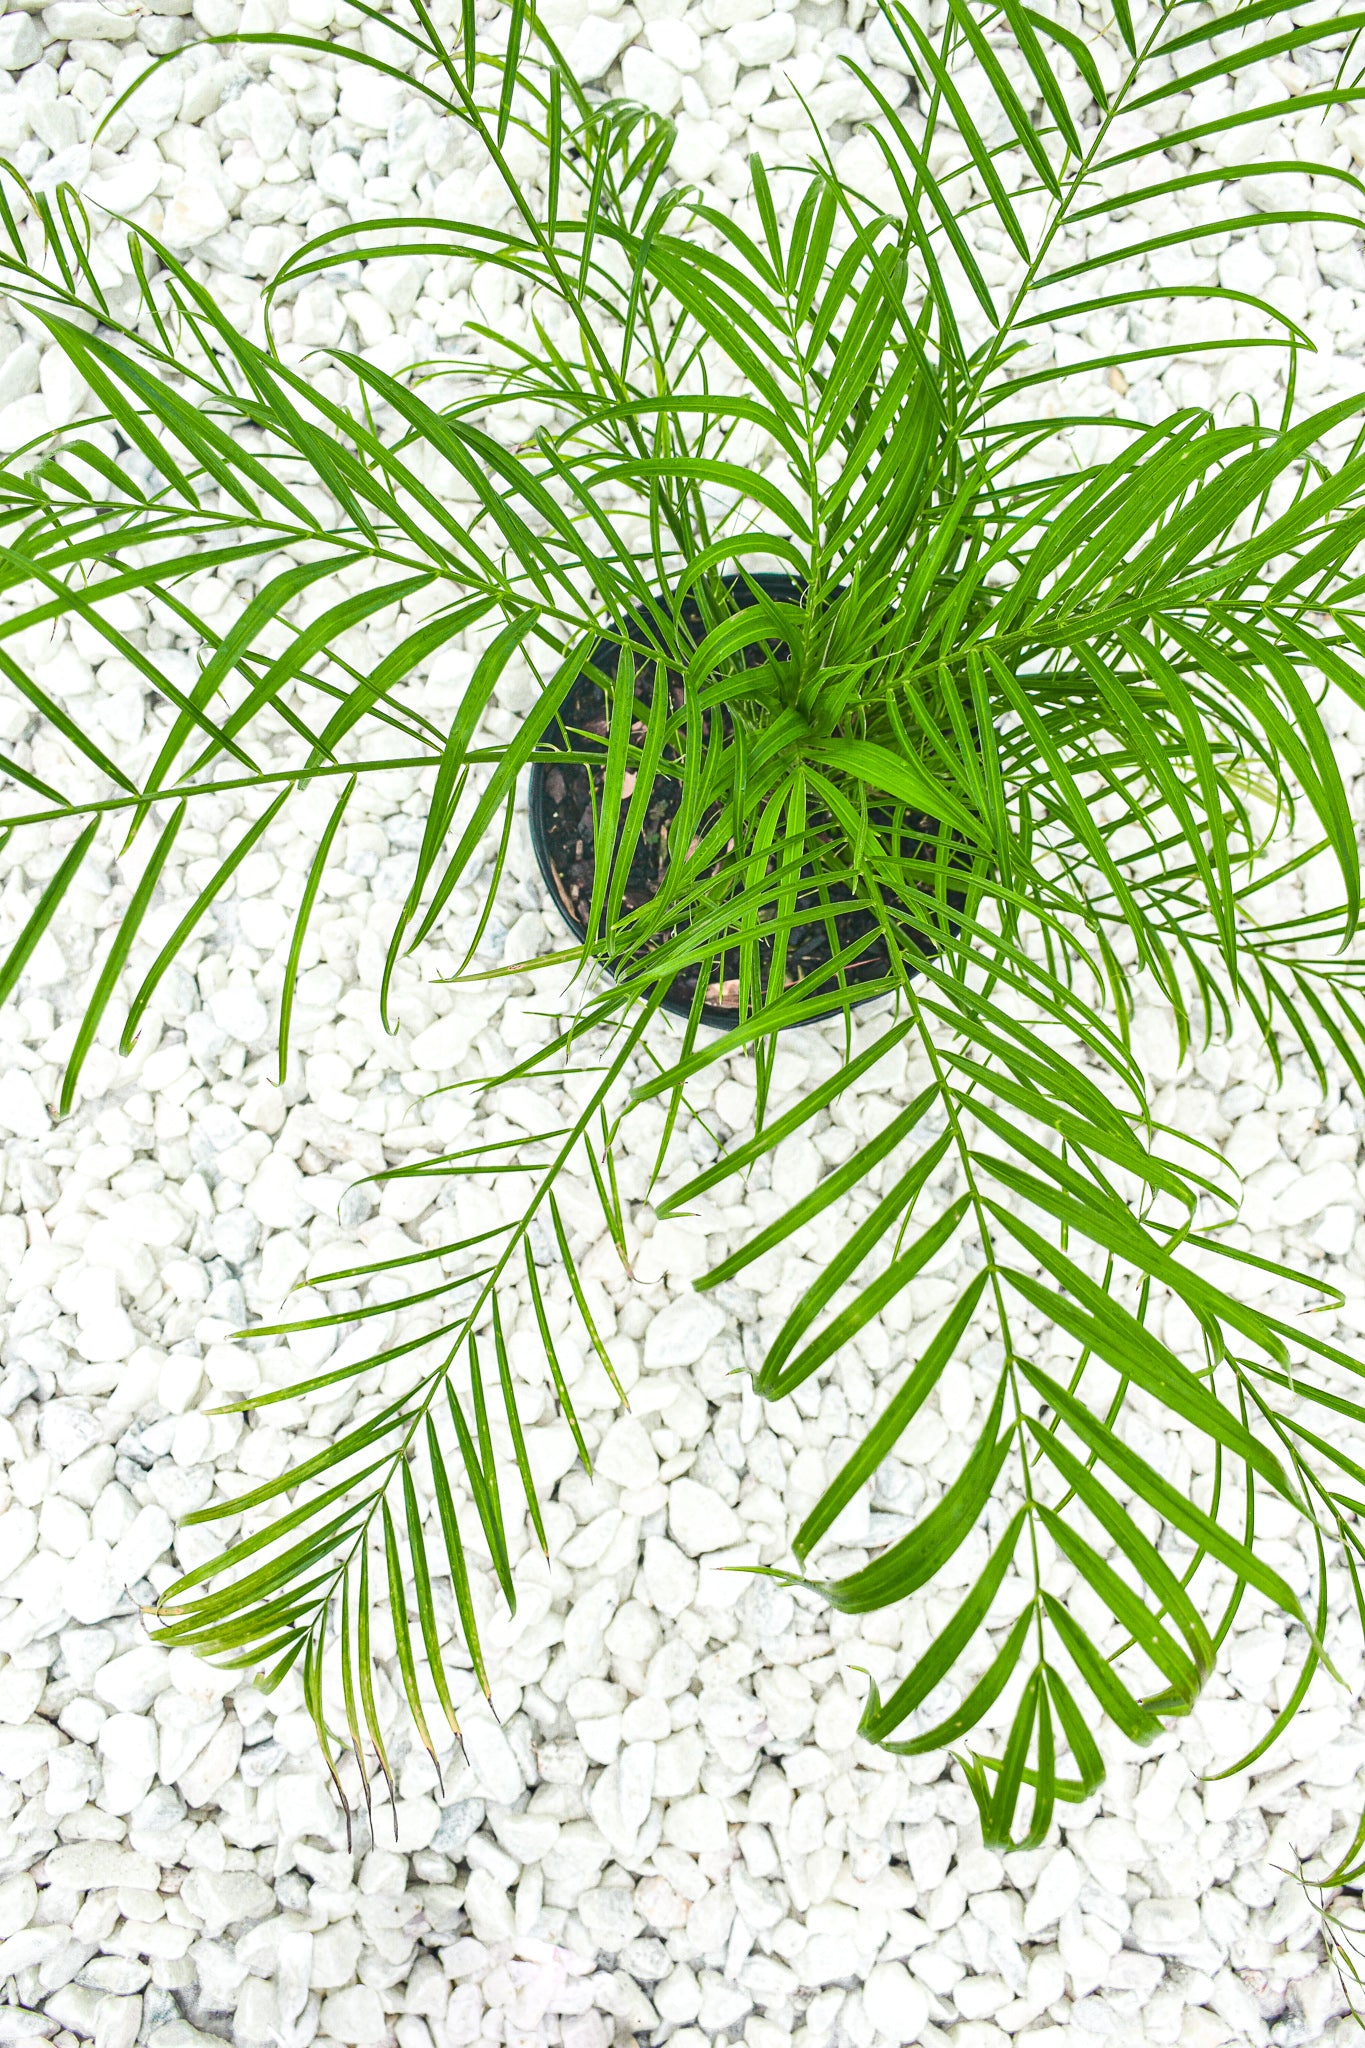 Pygmy Date Palm, Phoenix Roebelenii - Belle's Greenhouse